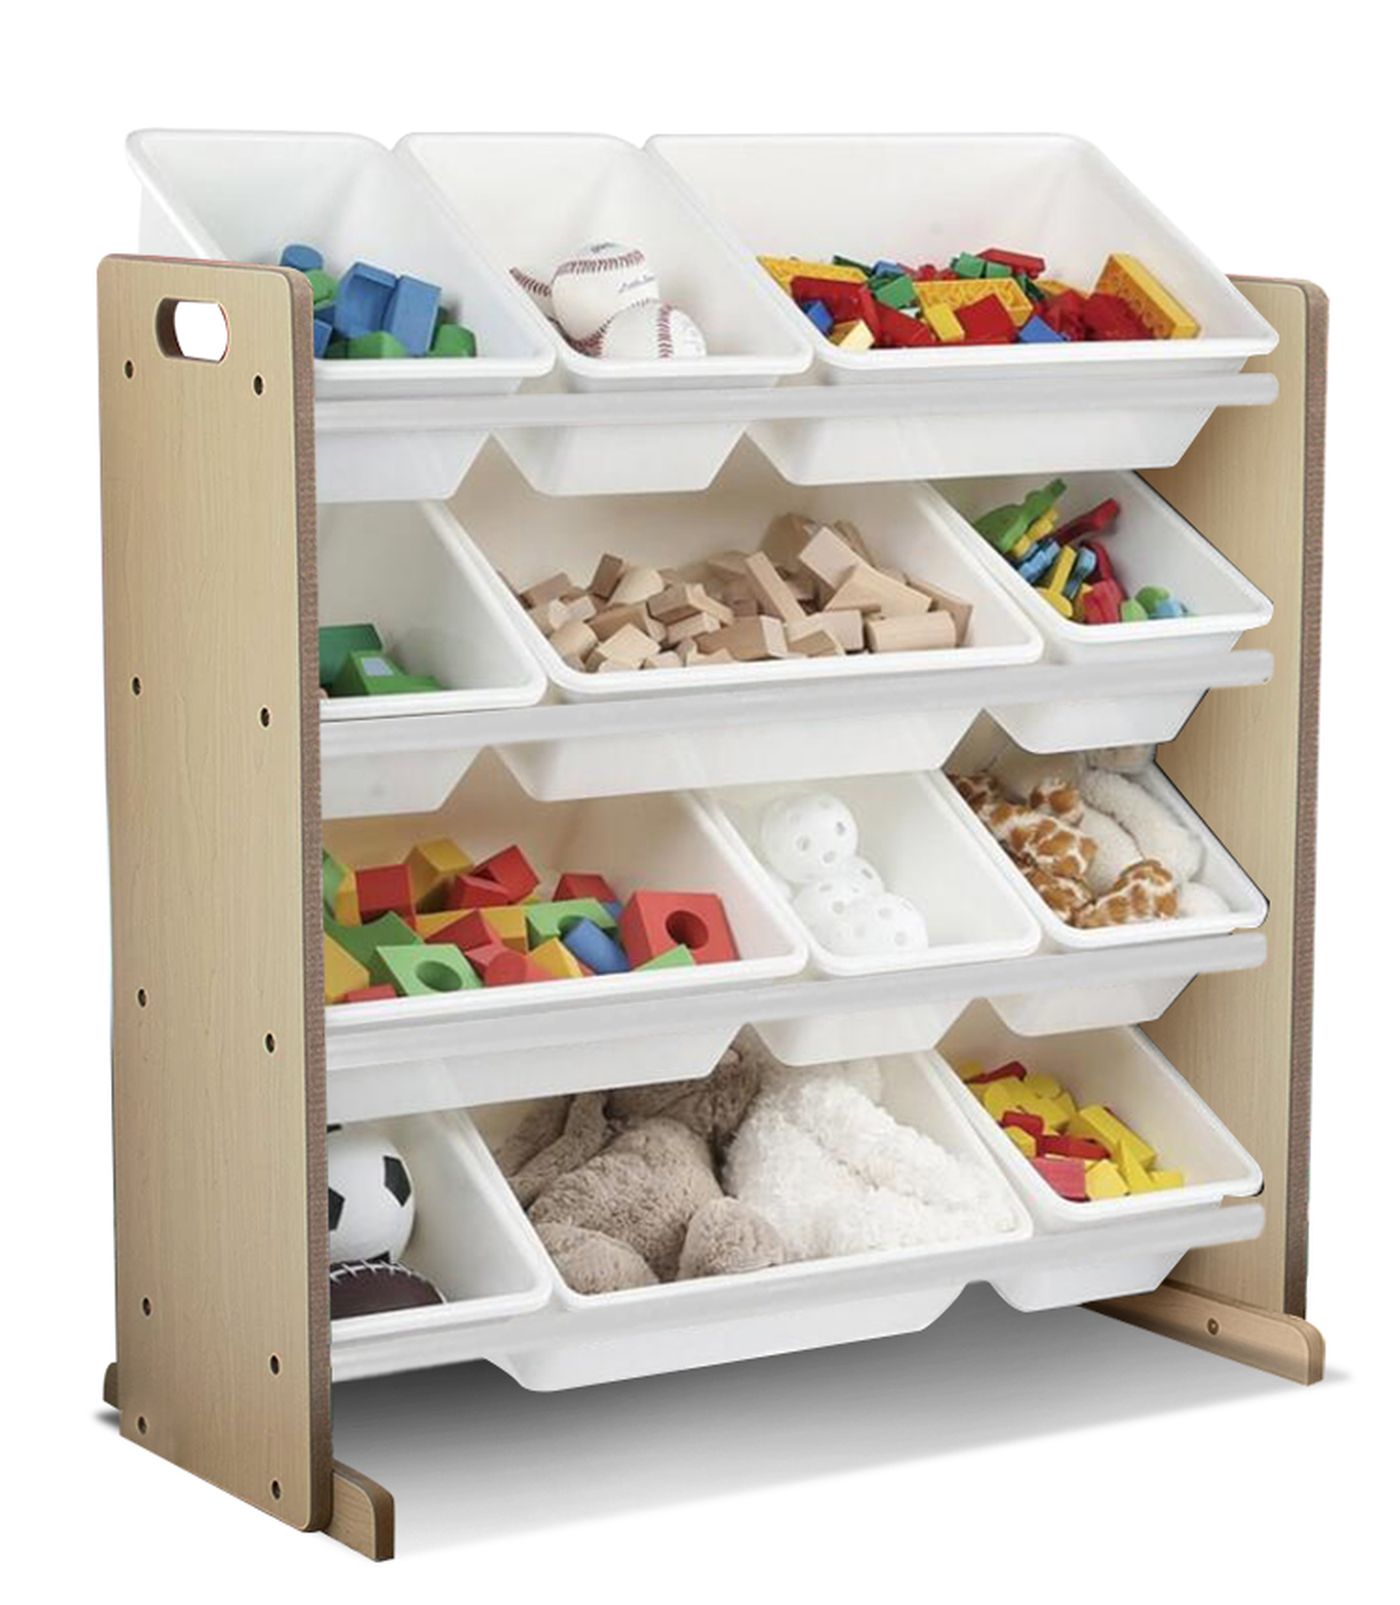 Toy-Storage-Maple-Organiser-with-White-Plastic-Bins